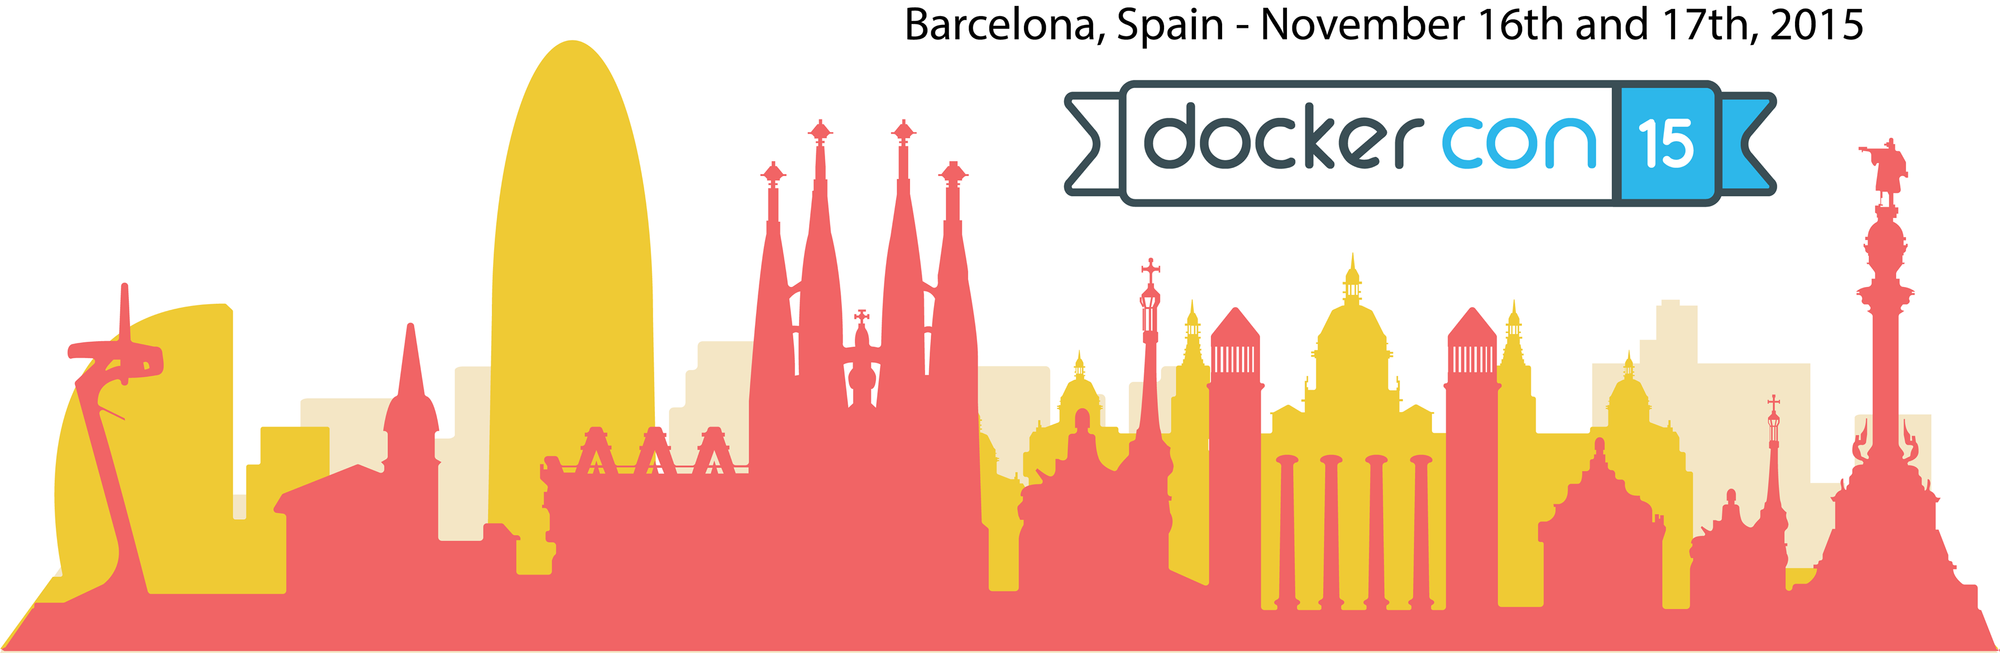 DockerCon Monitoring Presentation now available